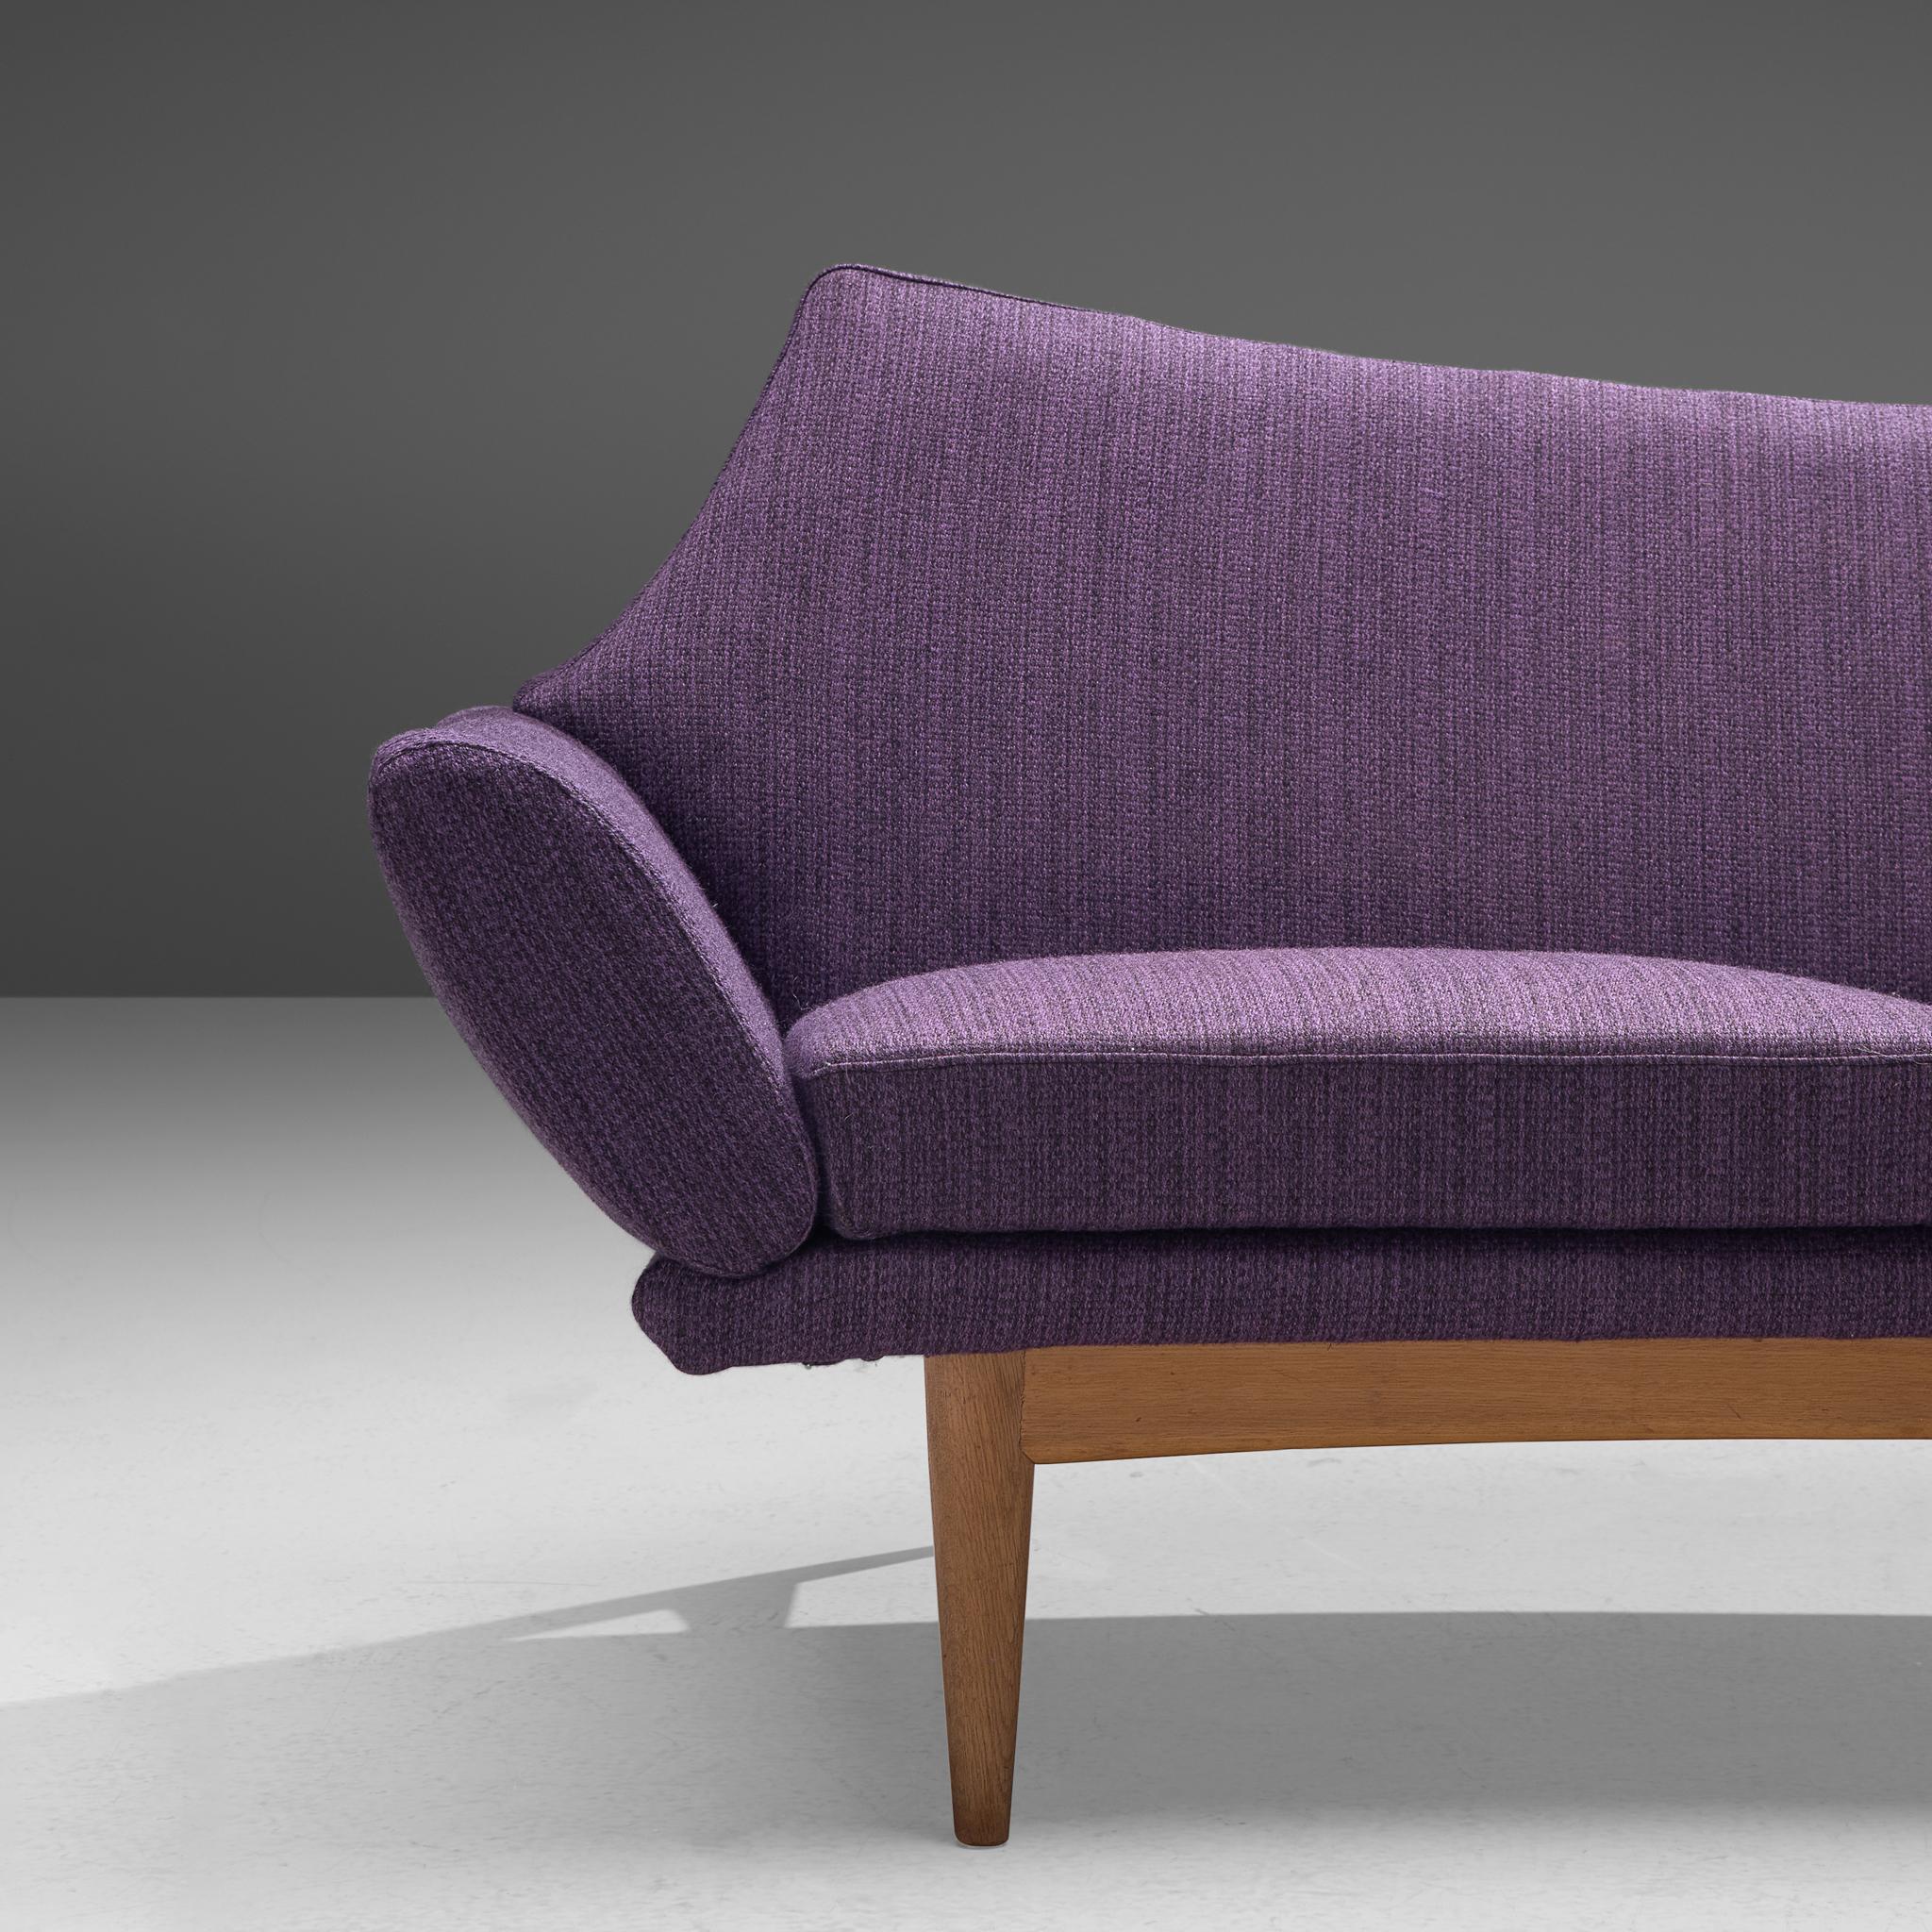 Swedish Johannes Andersen Curved Sofa in Royal Purple Upholstery